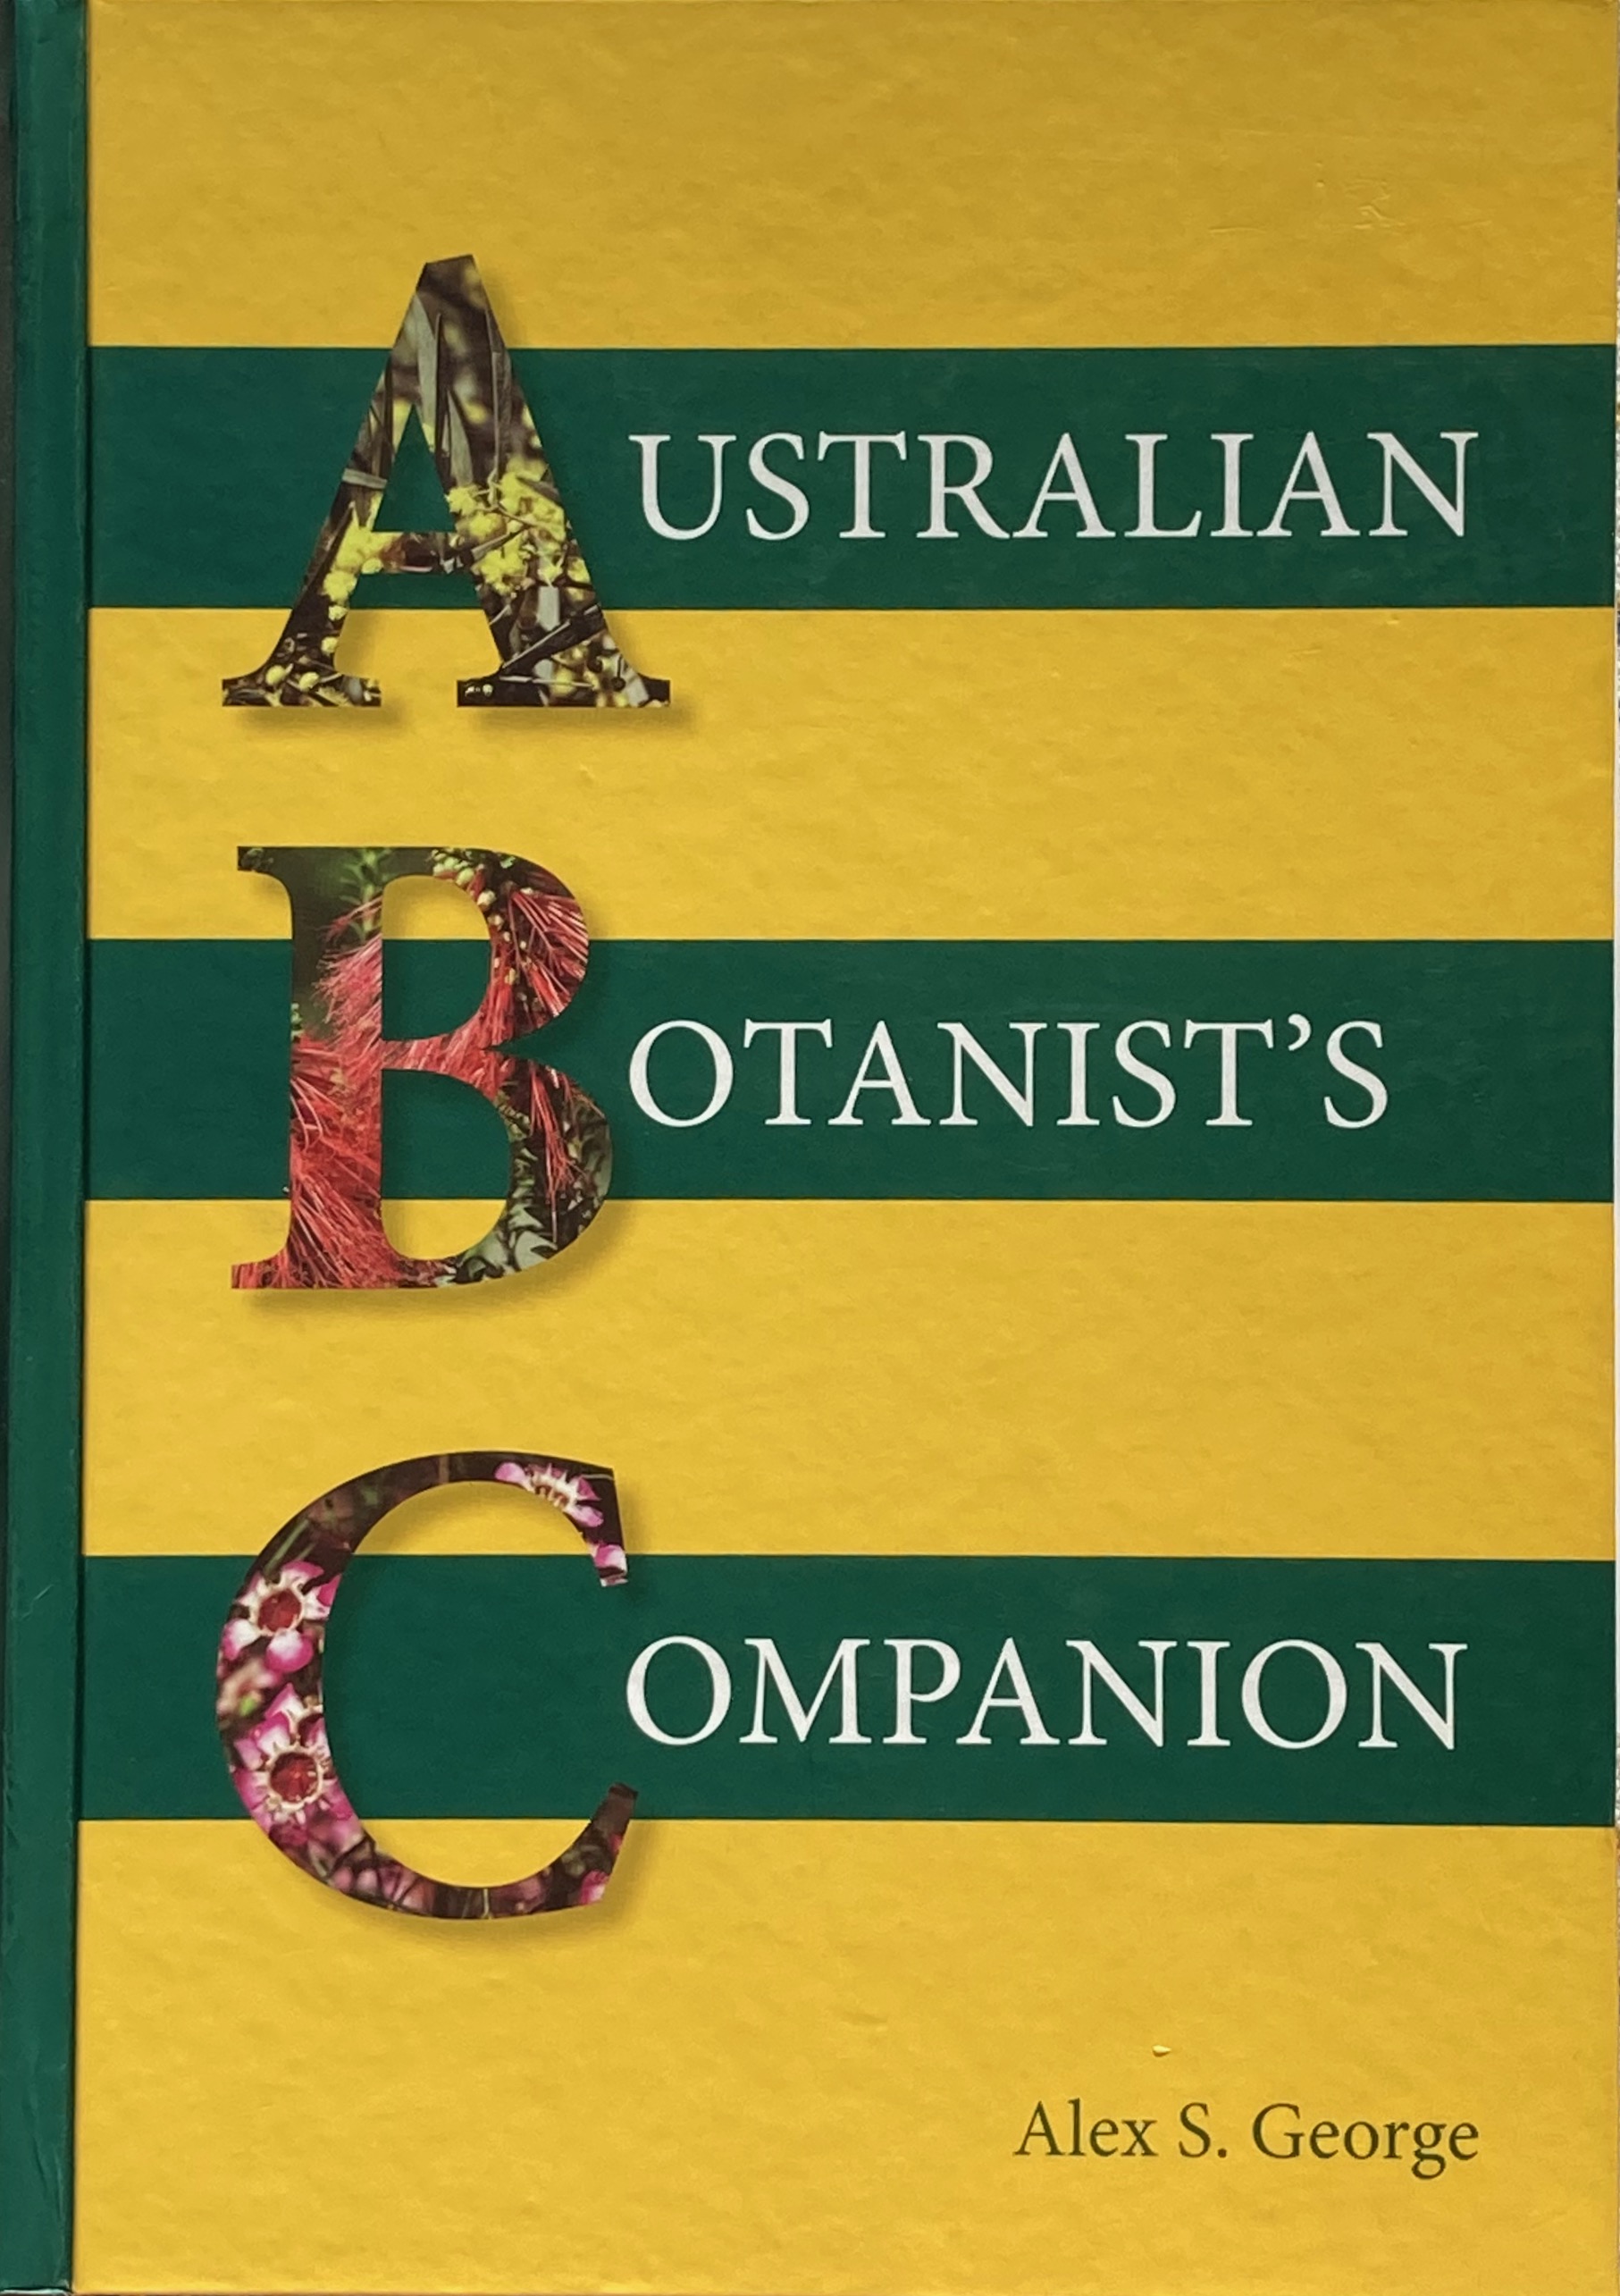 Australian Botanist's Companion by George, Alex S.: As new Hard covers ...